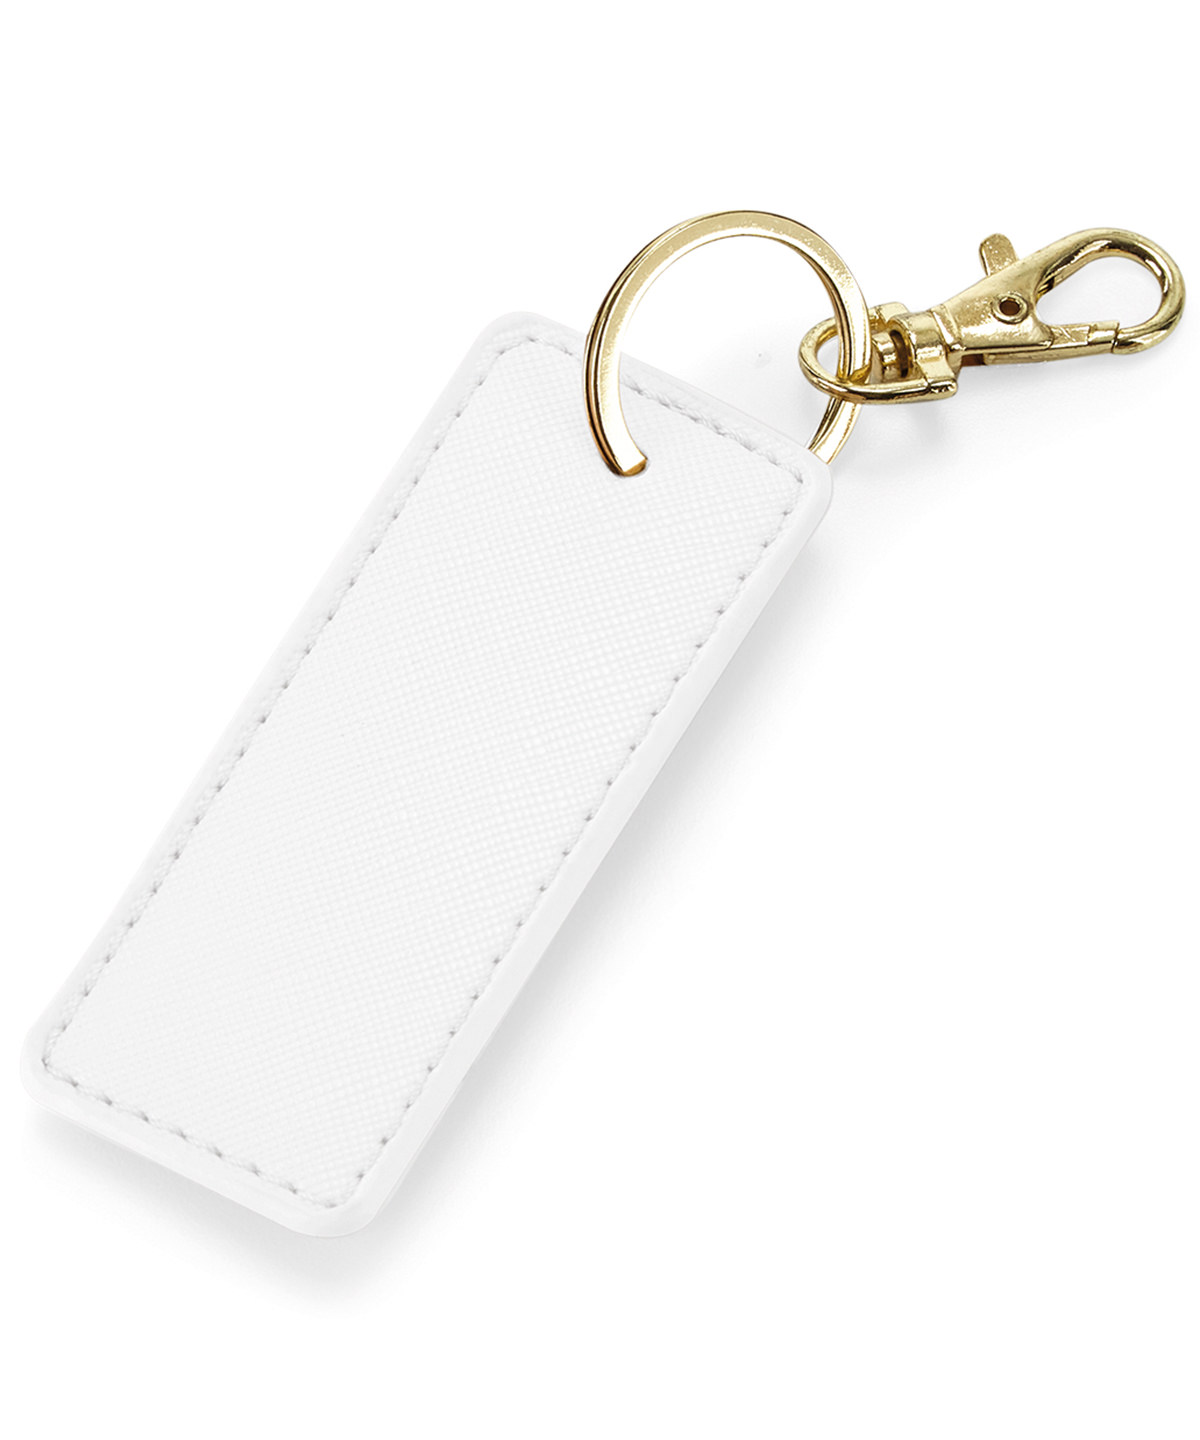 Boutique Keyclip Soft White Size One Size